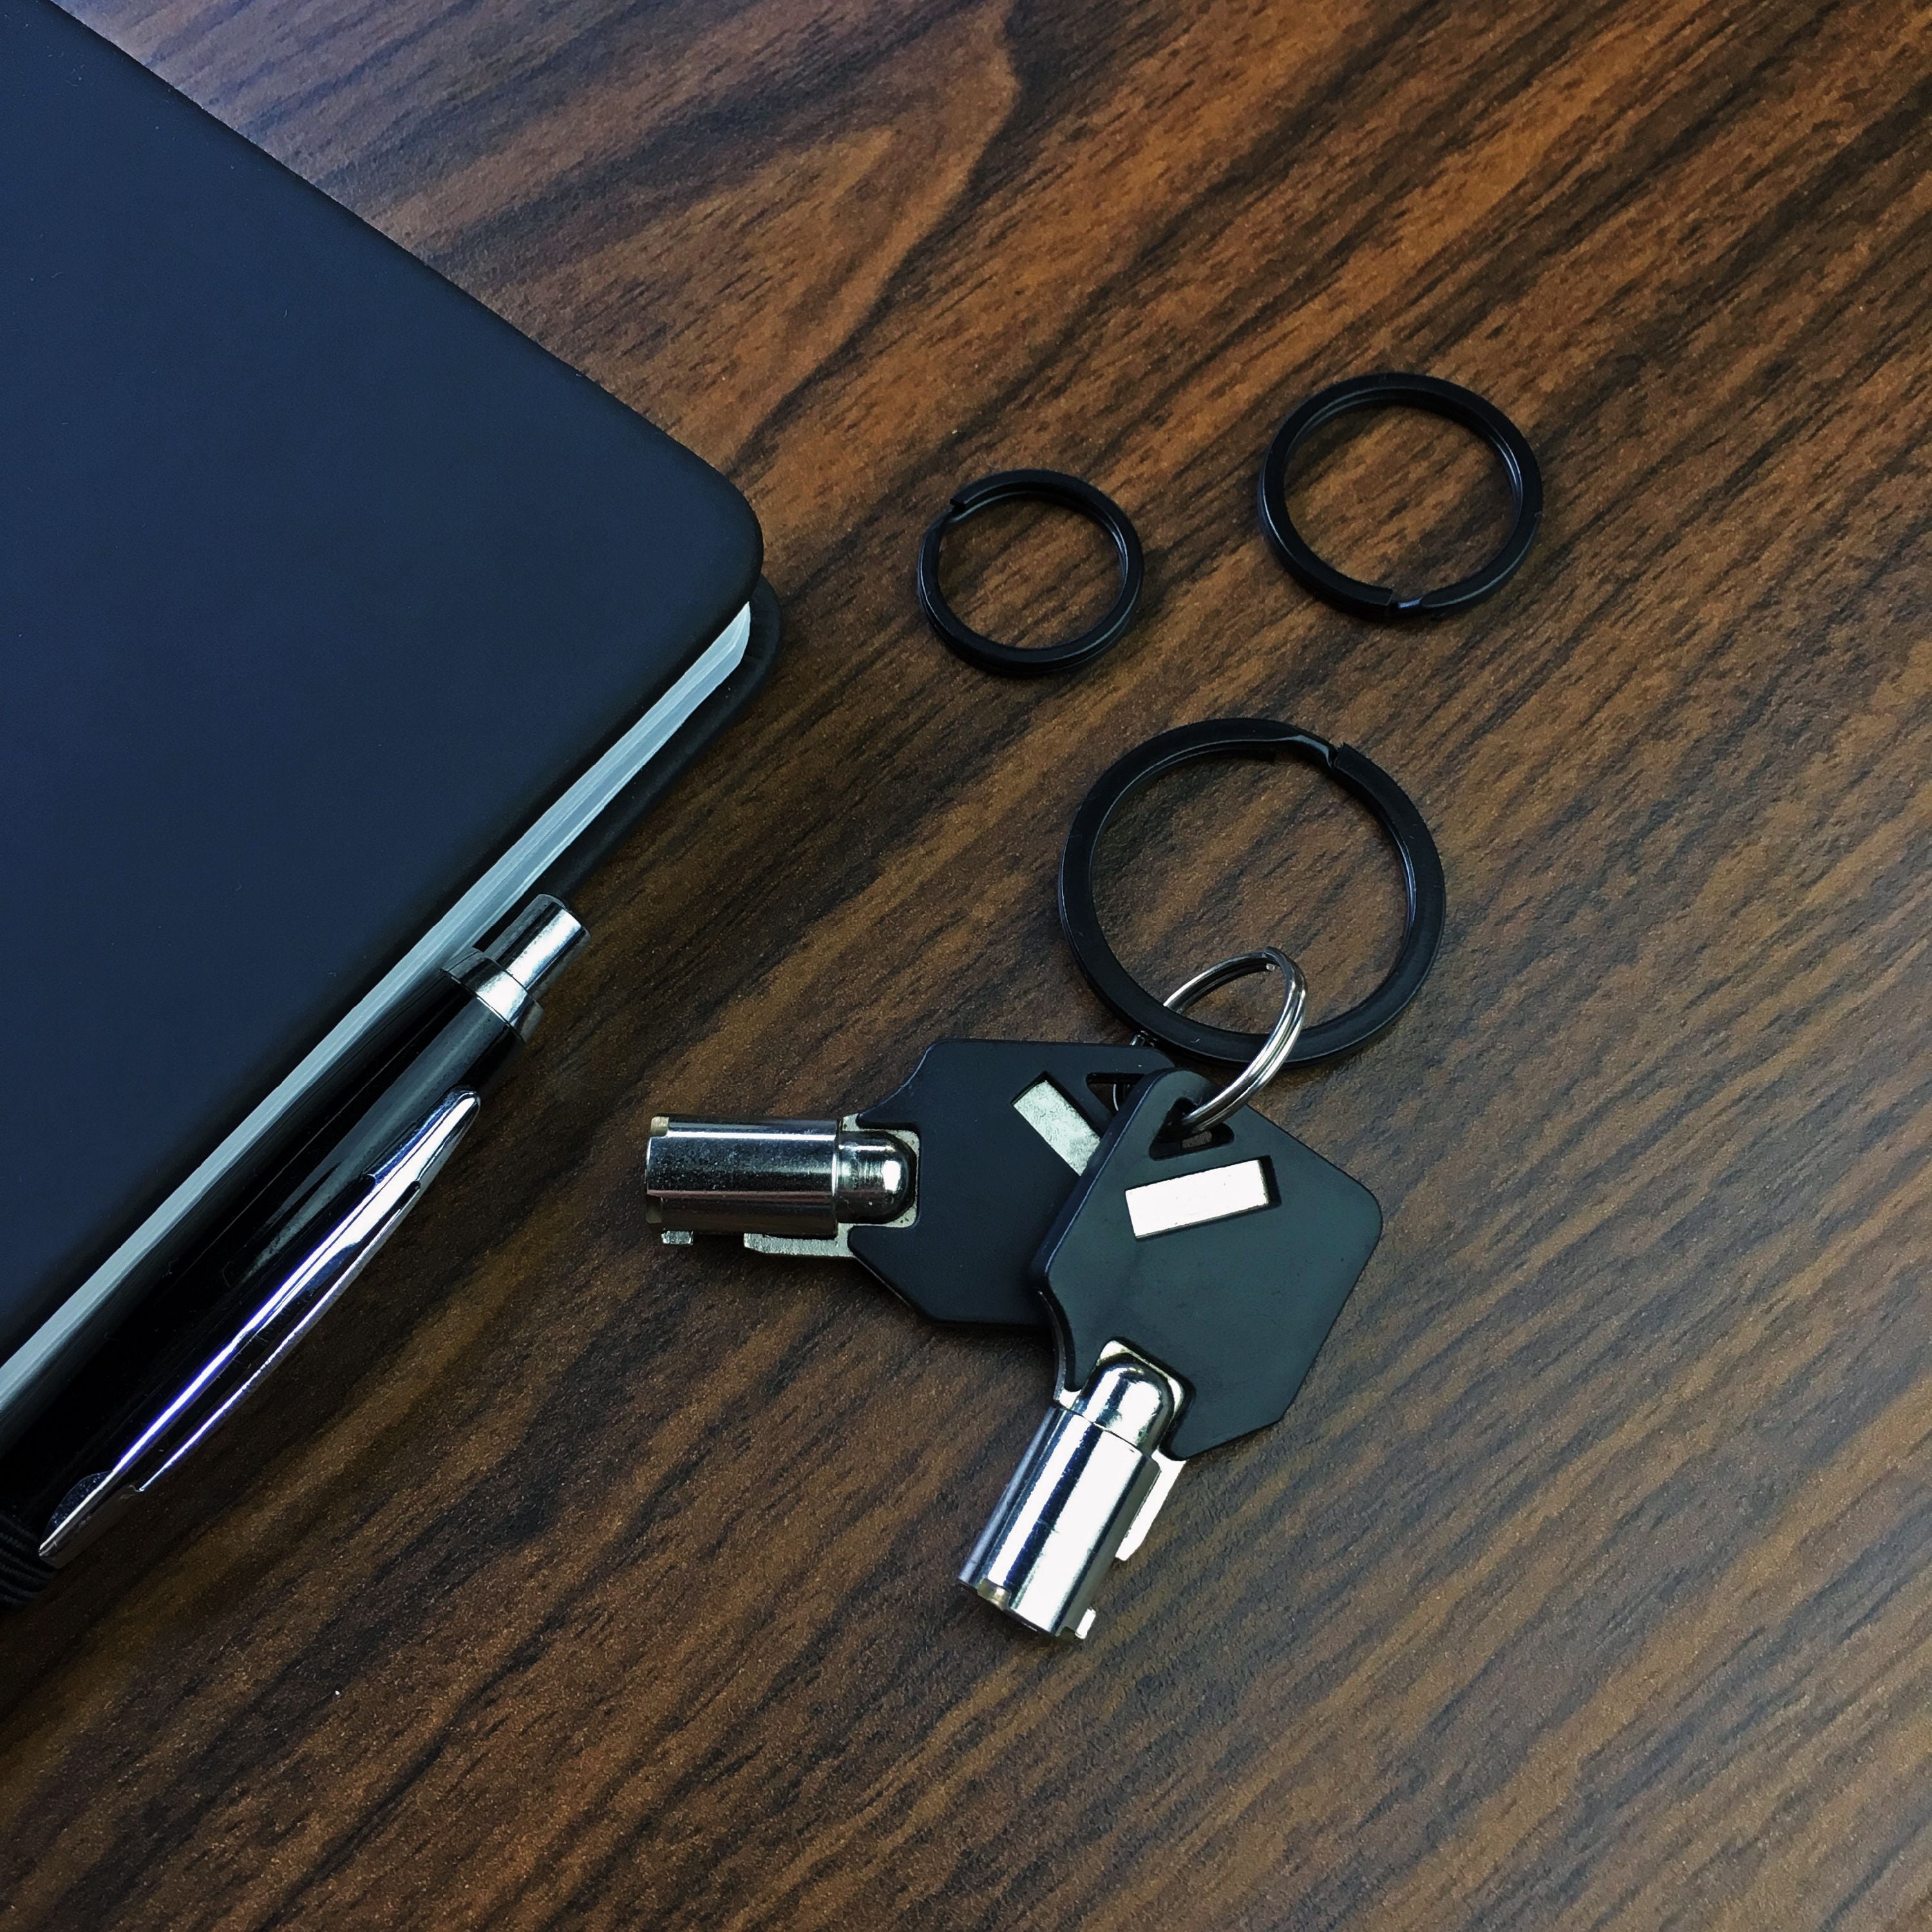 HeeYaa Flat Key Rings 10 Pieces 1 Inches Flat Key Rings Metal Keychain Rings Split Keyrings Flat O Ring for Home Car Office Keys Attachment(Black)